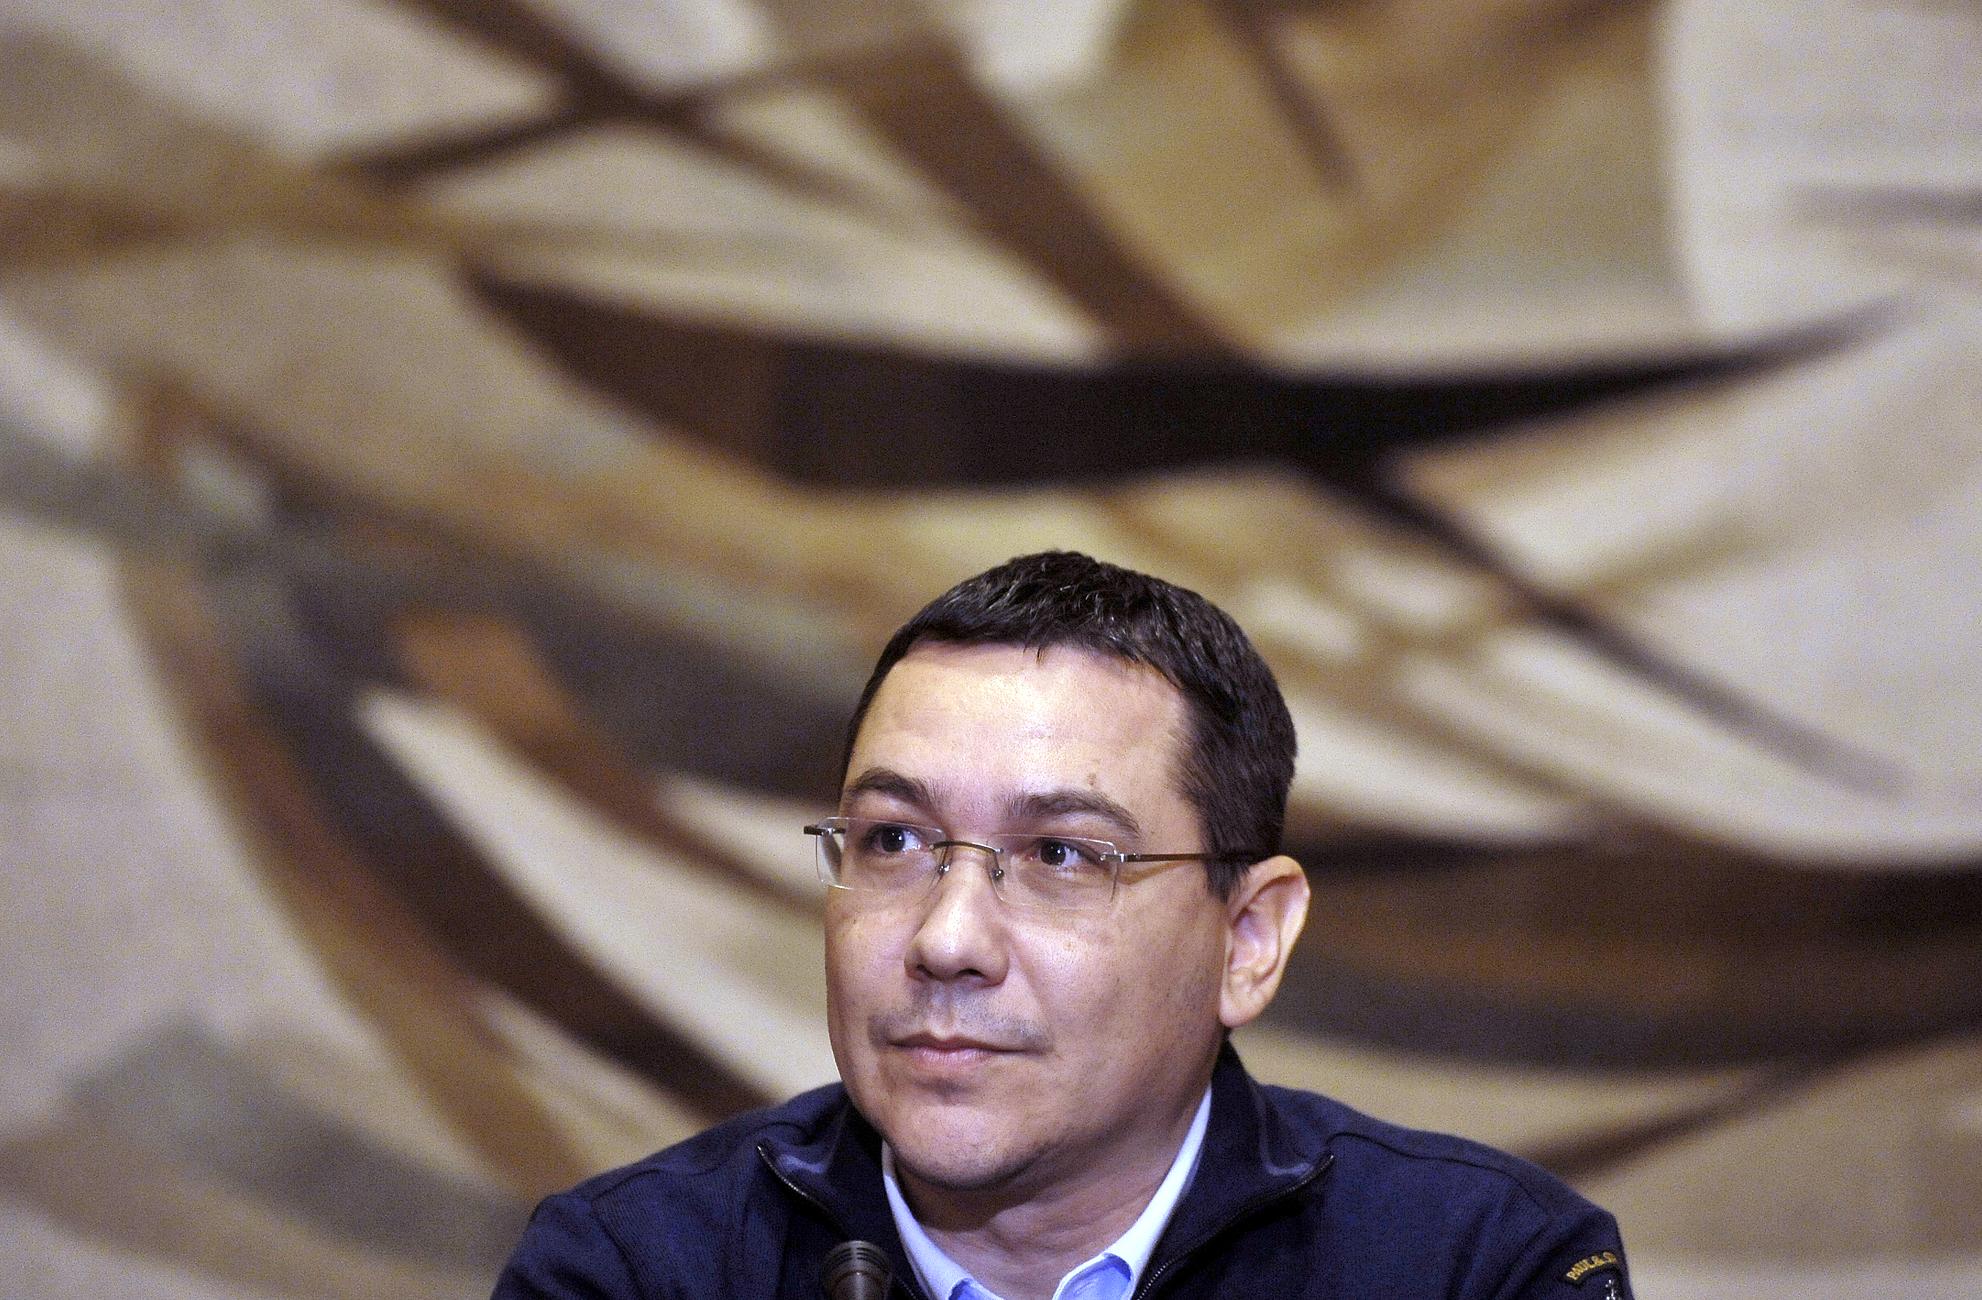 Victor Ponta is bajba kerülhet